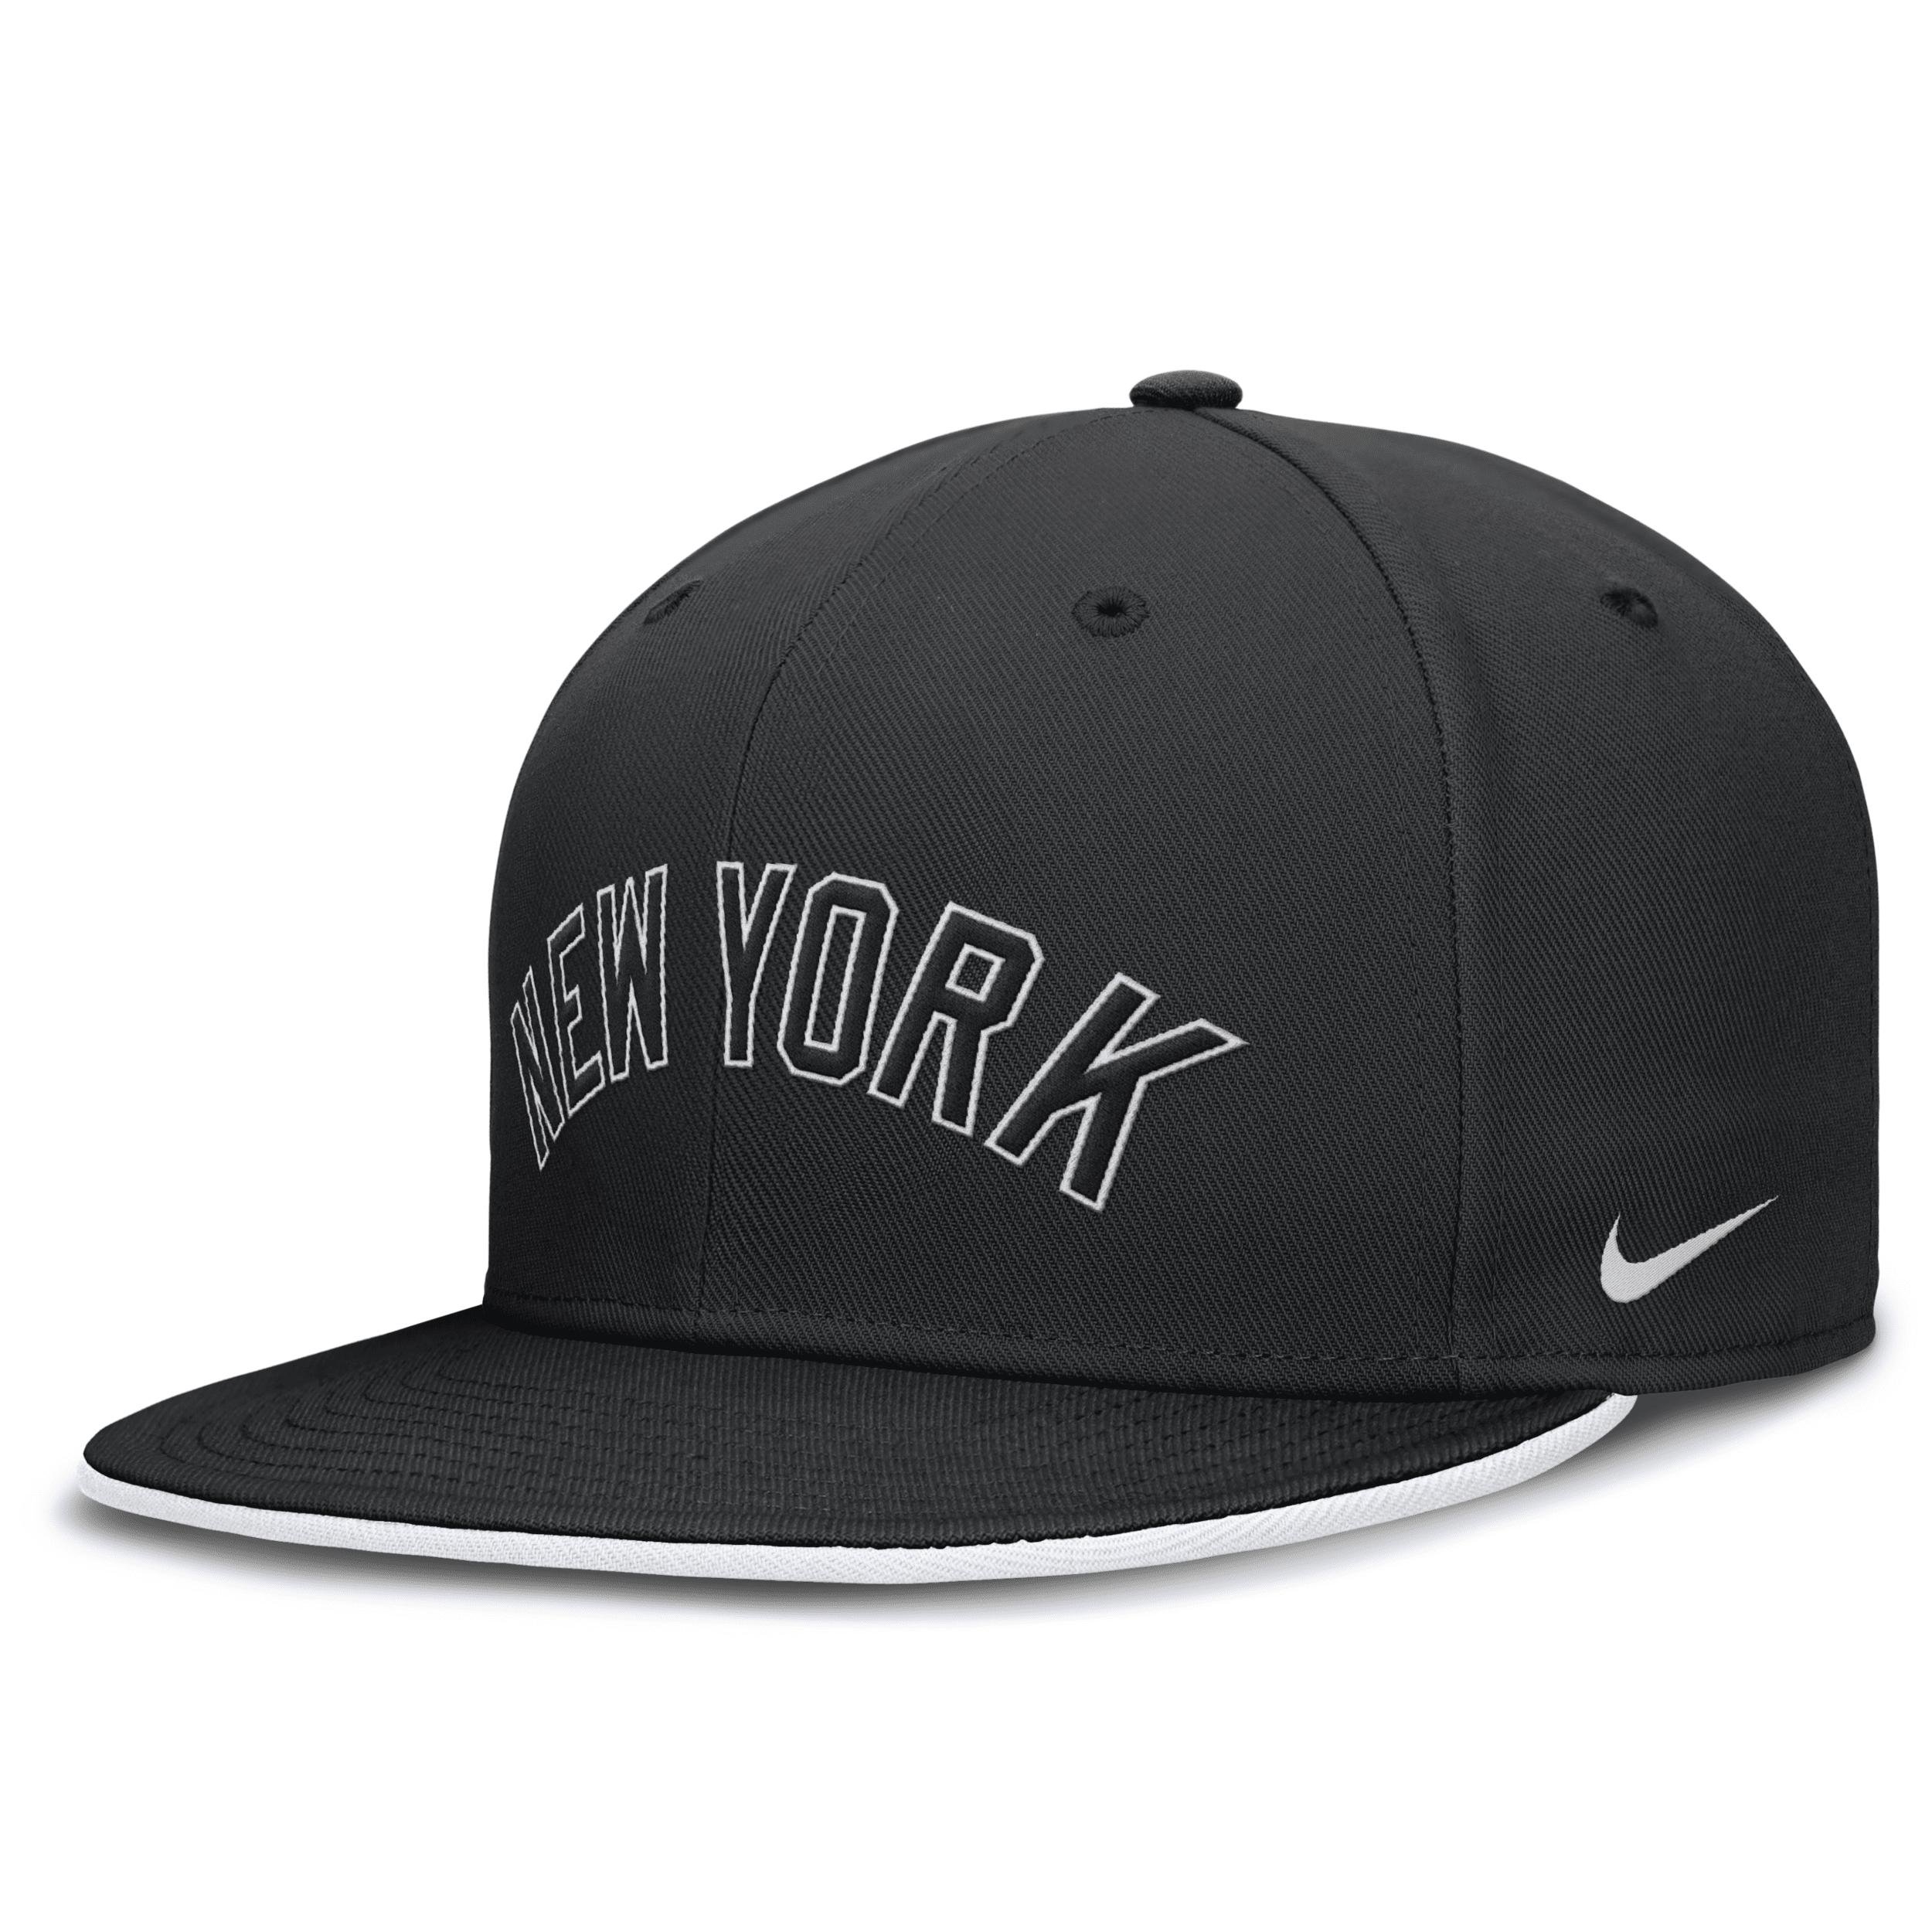 New York Yankees Primetime True Nike Men's Dri-FIT MLB Fitted Hat by NIKE